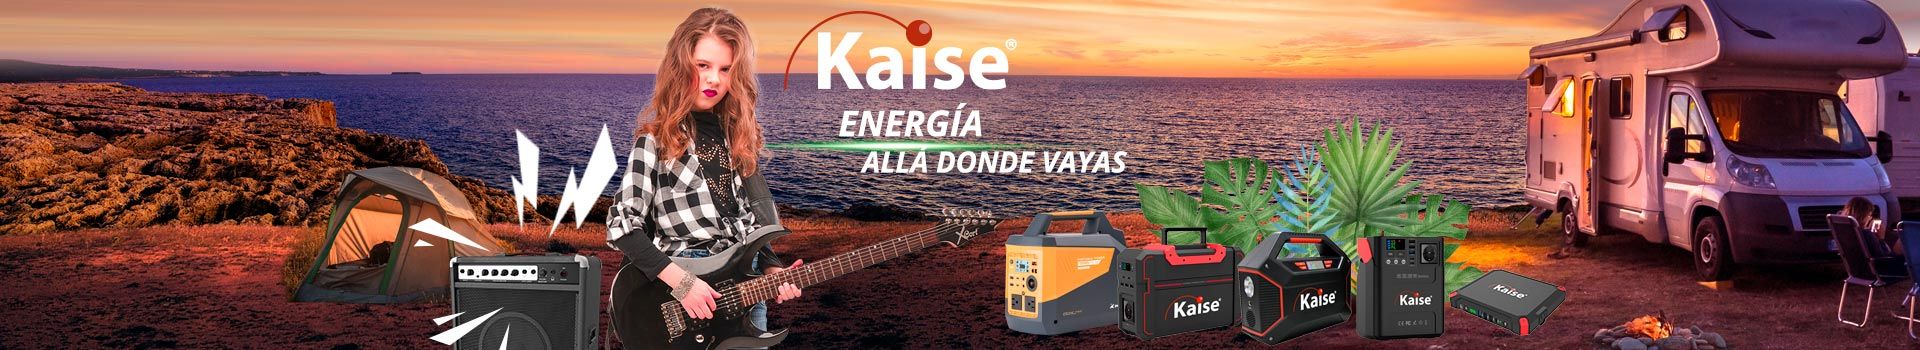 kaise banner web 2 TEMPEL GROUP BATERAS KAISE Merca2.es